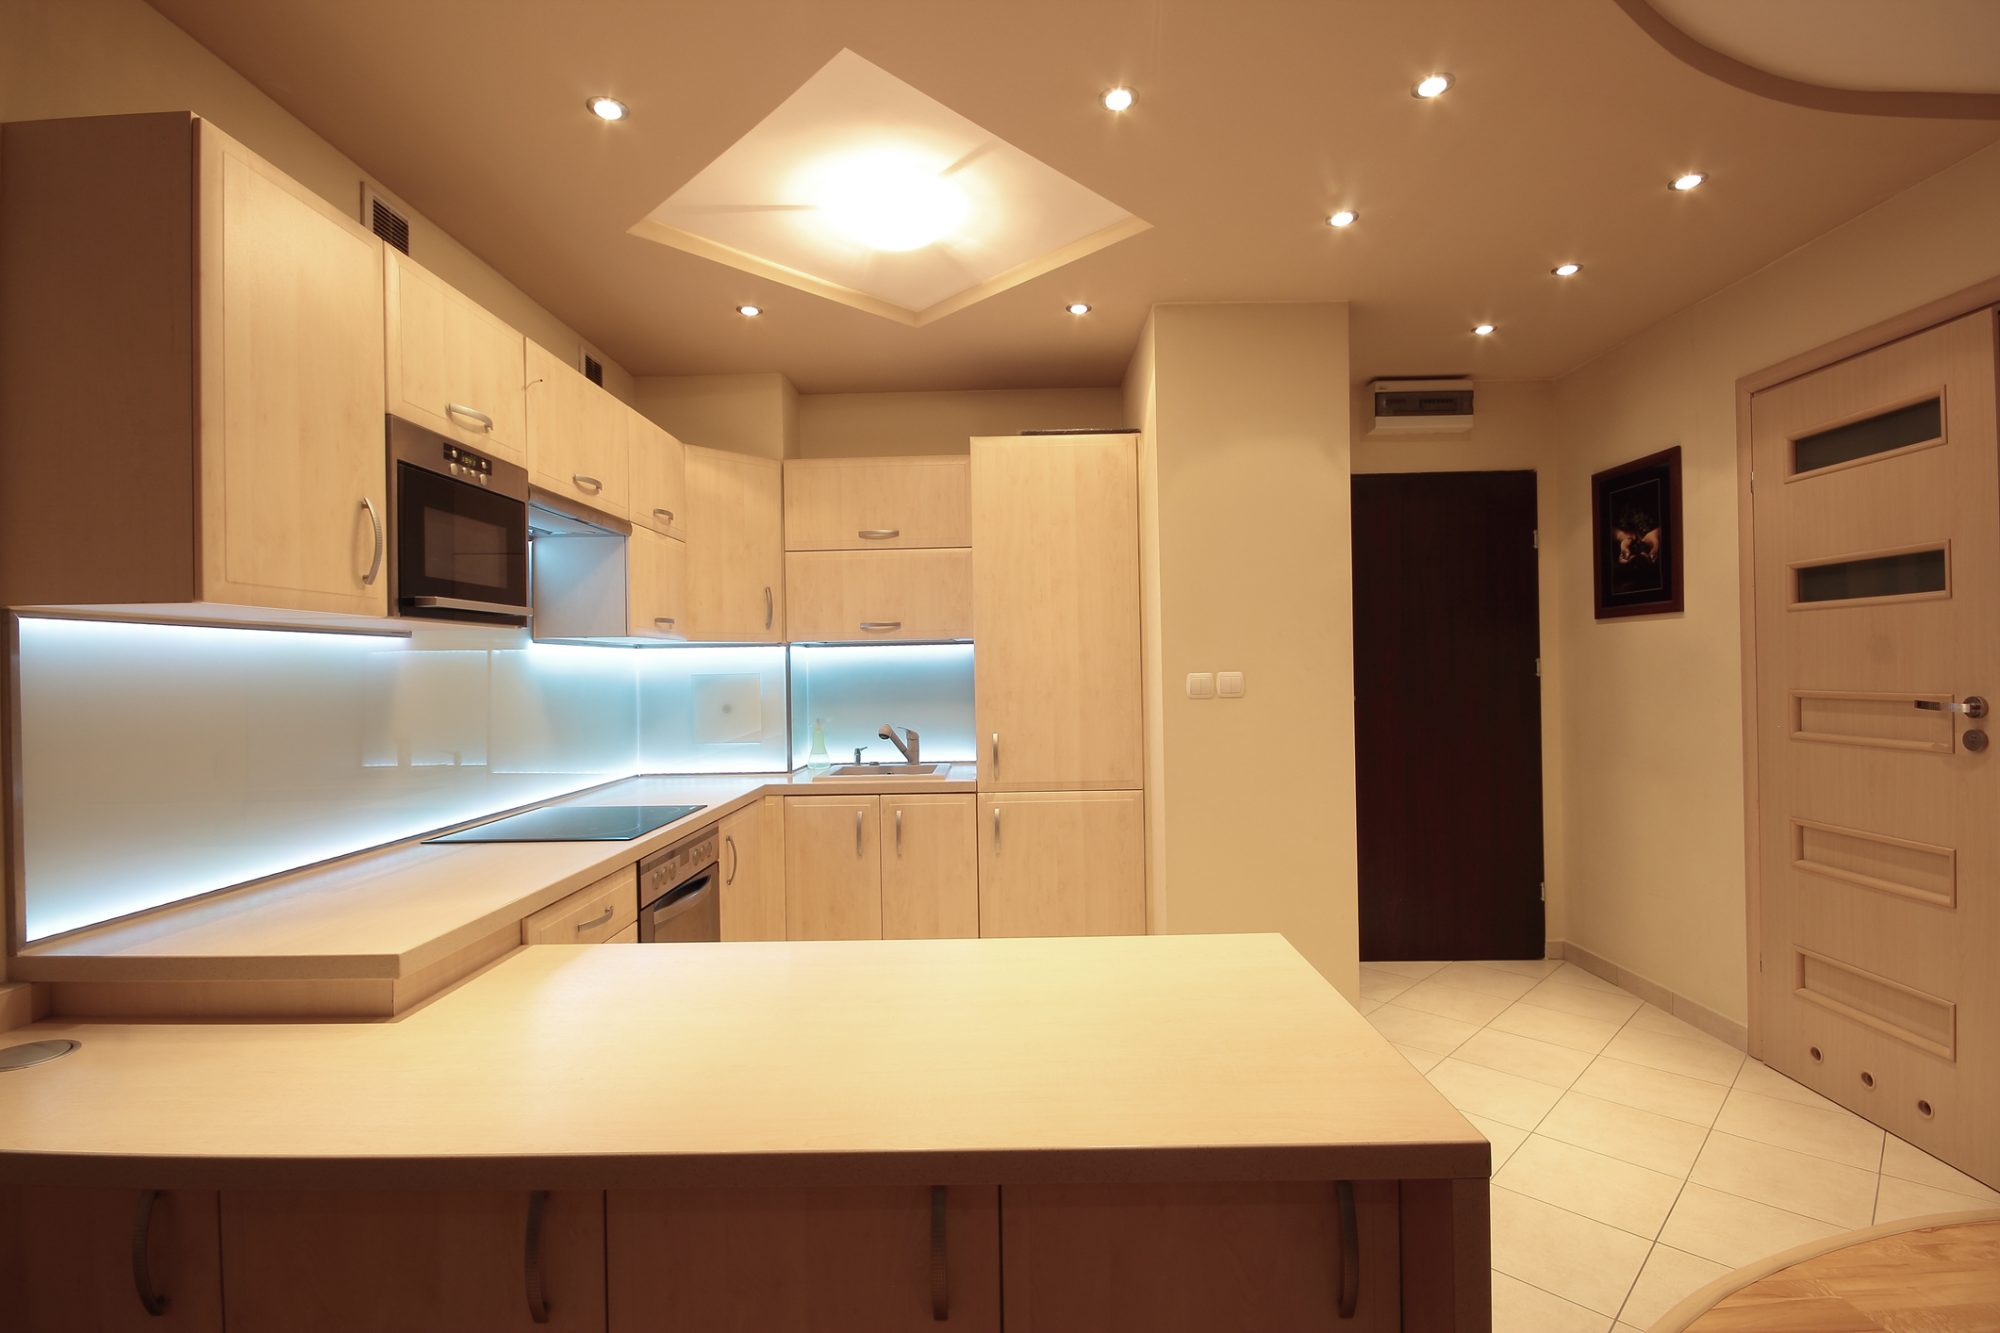 Modern luxury kitchen with white LED lighting.